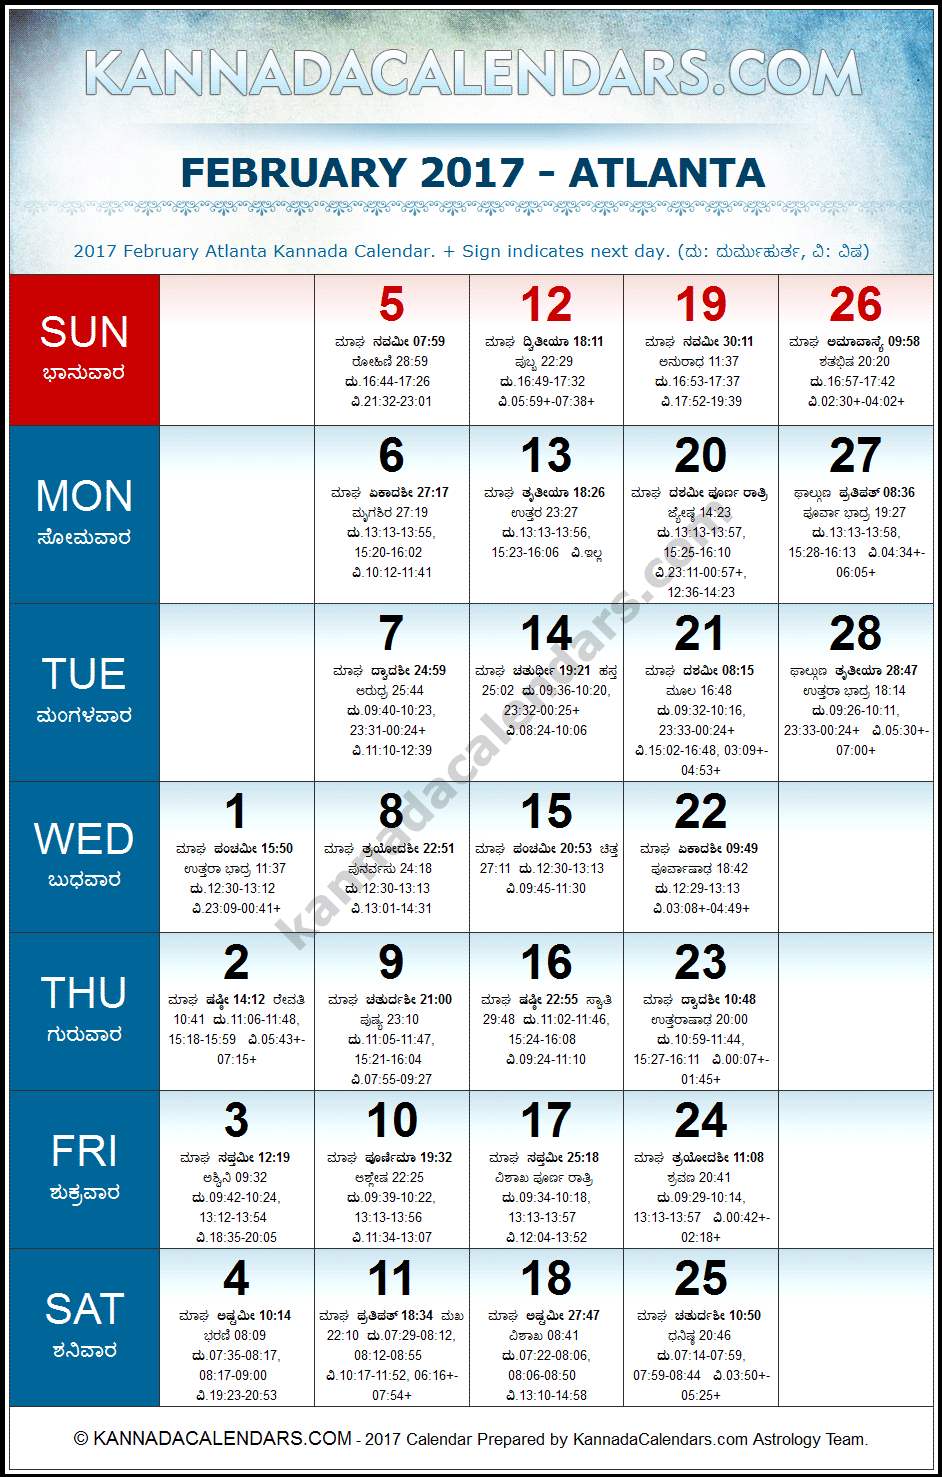 February 2017 Kannada Calendar for Atlanta, USA